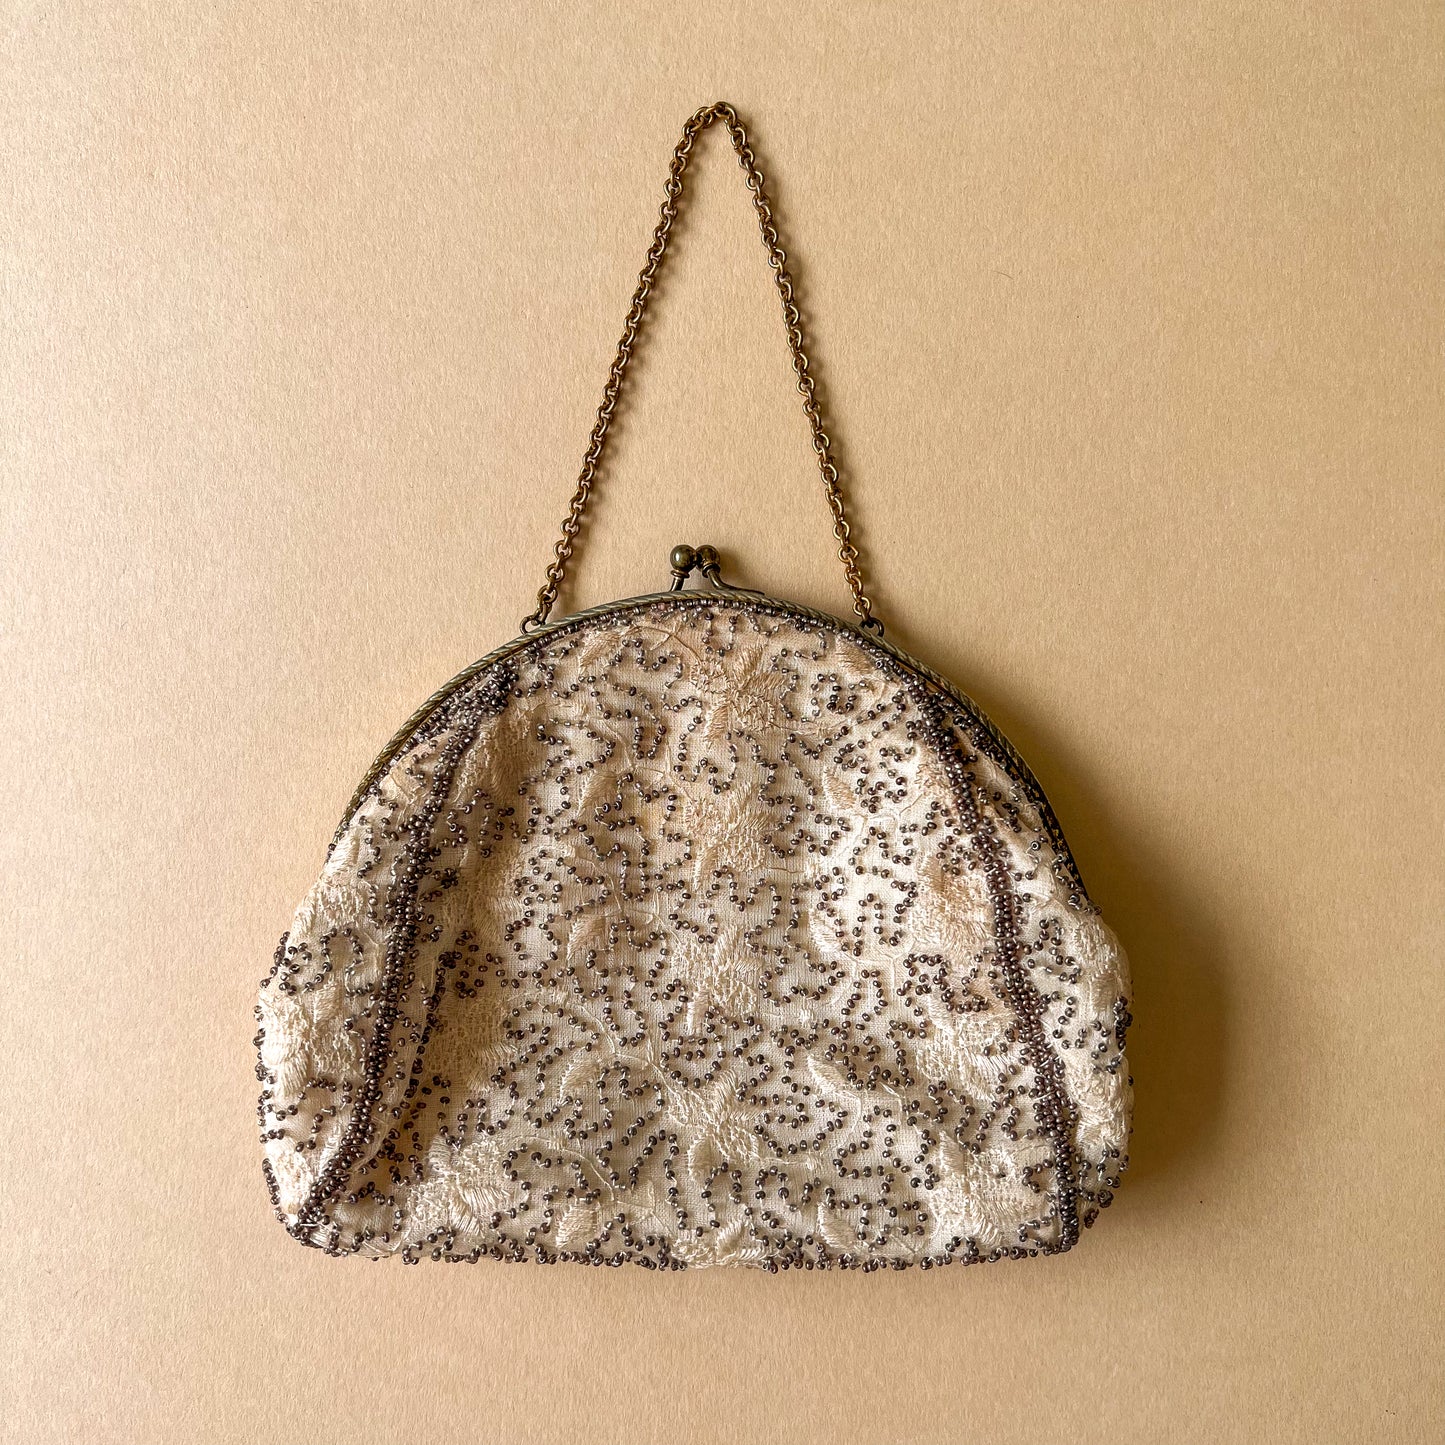 Stunning 1950s Weinstocks Vintage Beaded Handbag